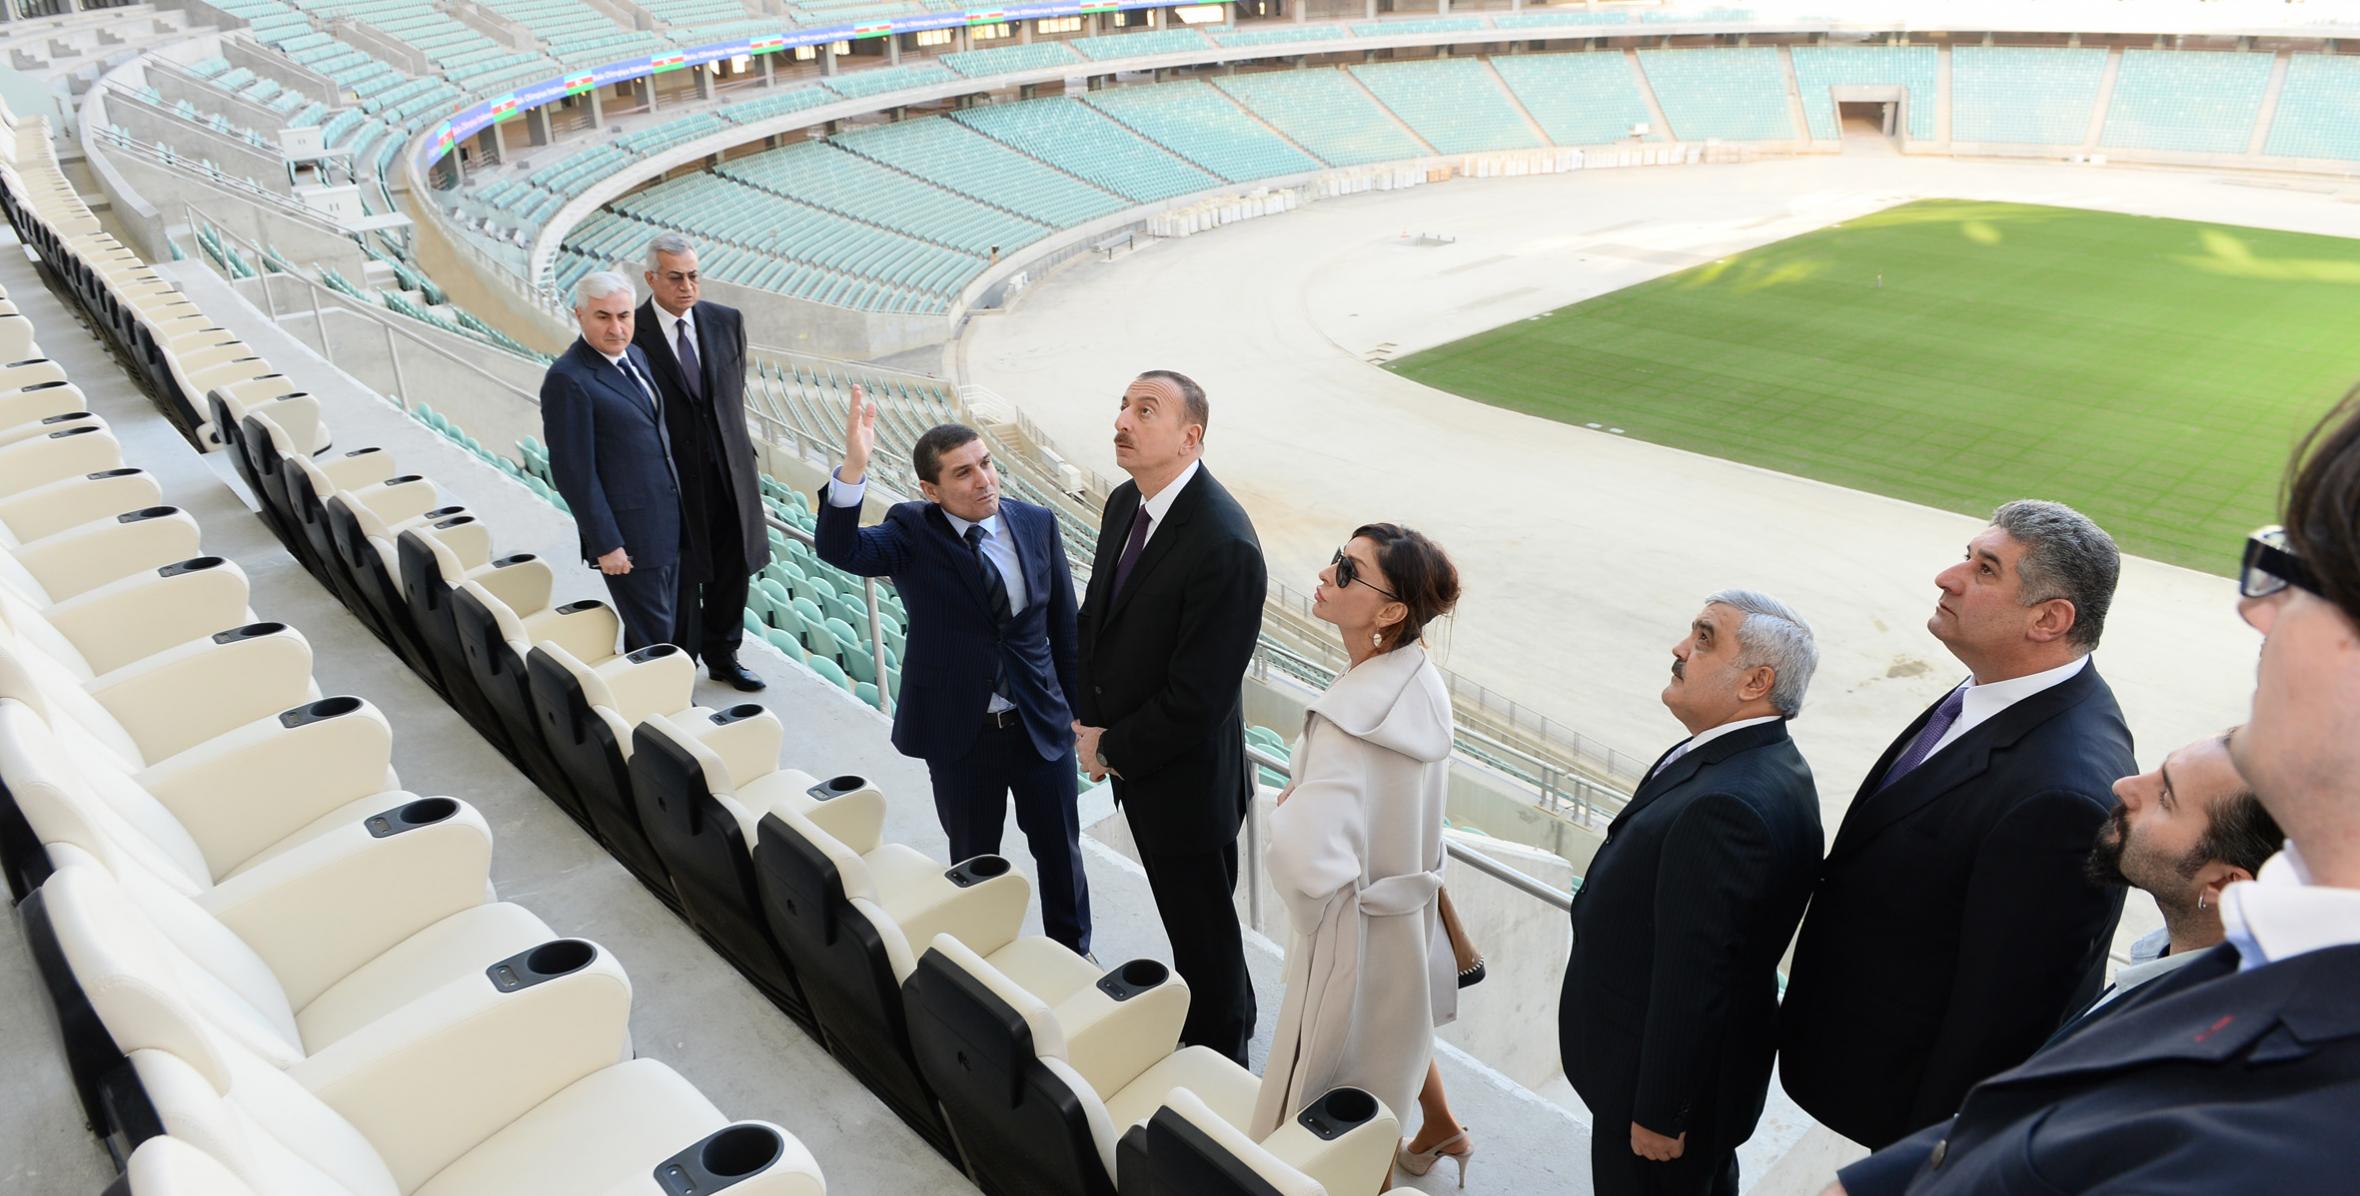 Ilham Aliyev reviewed ongoing work at the Baku Olympic Stadium